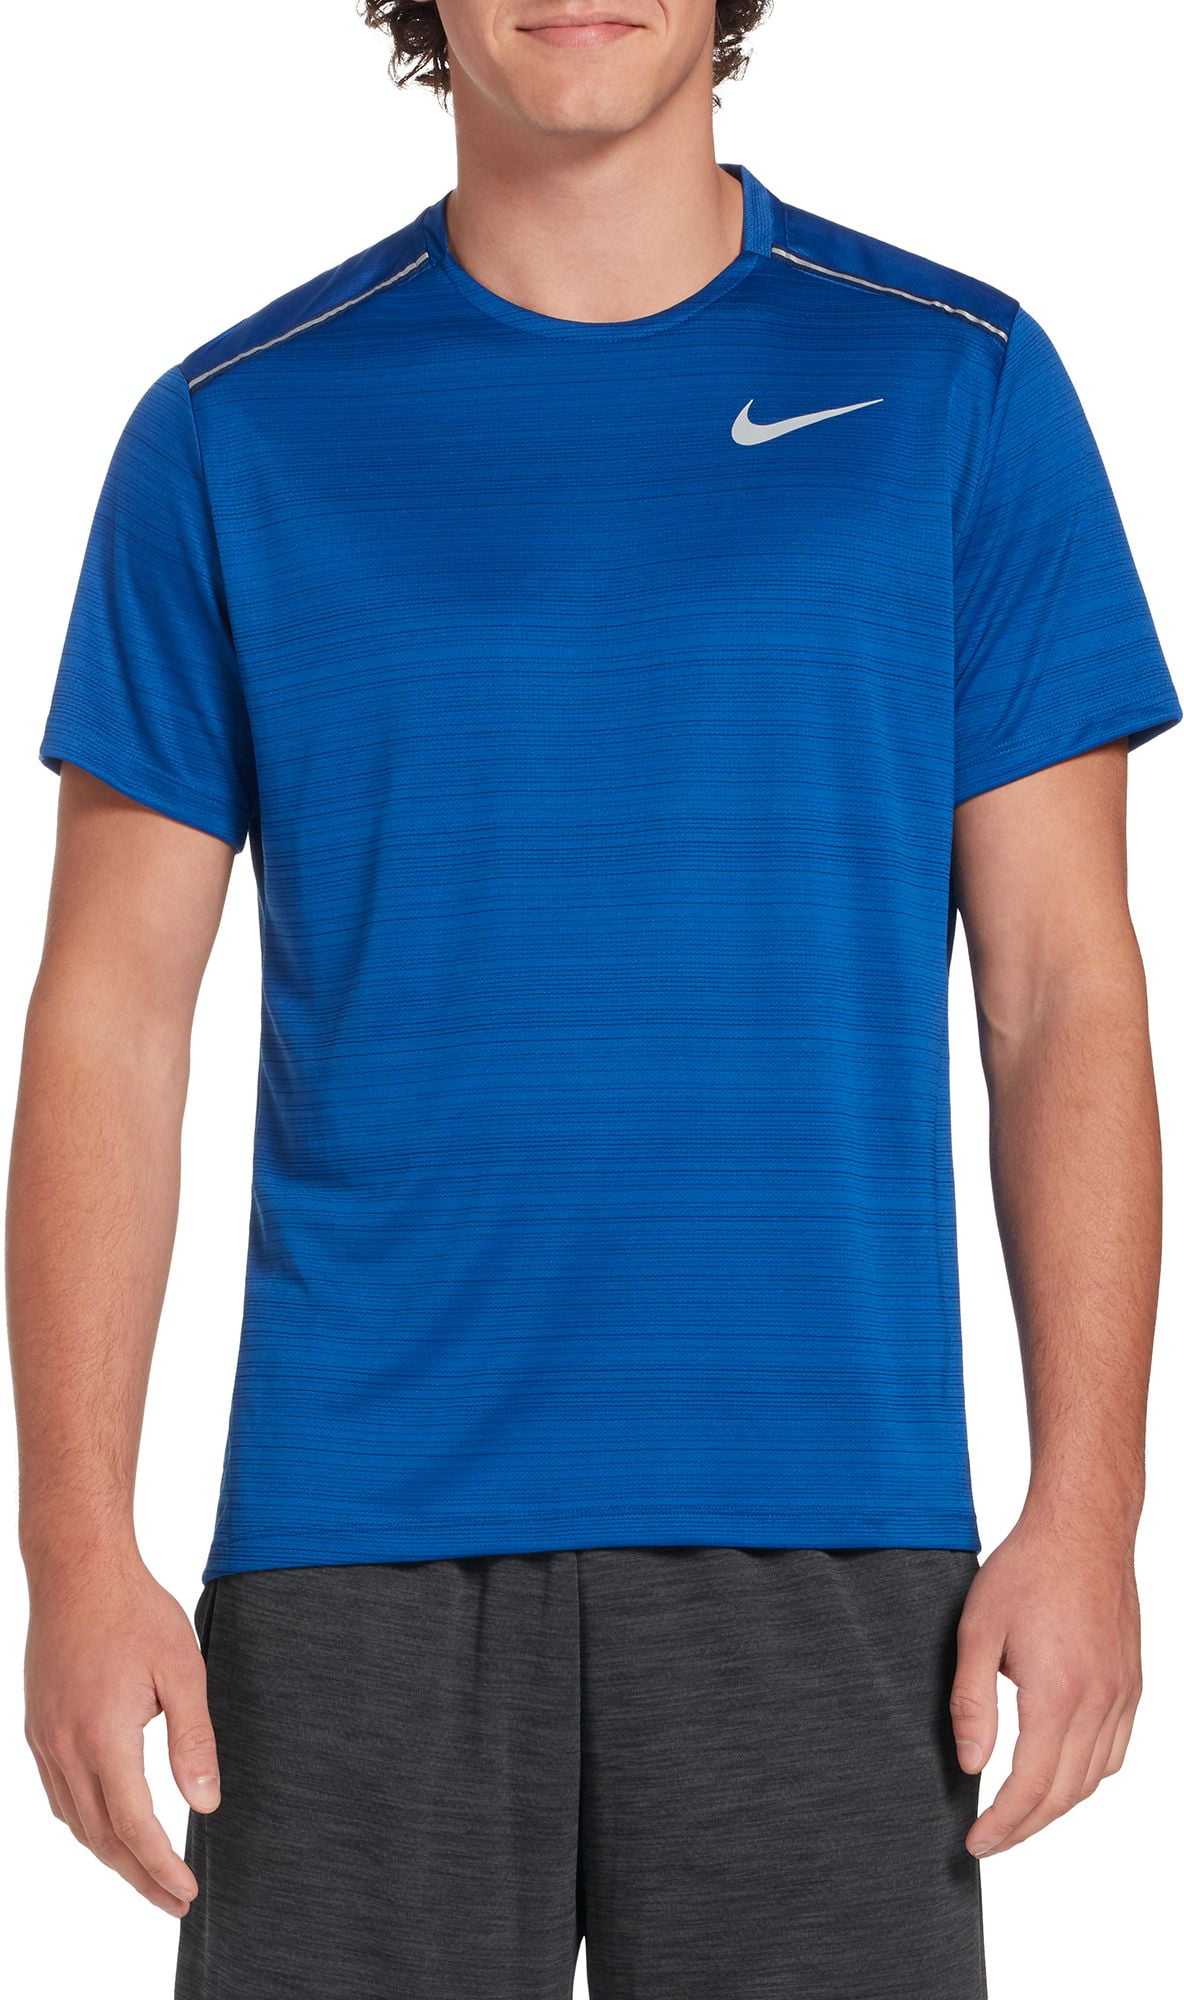 Nike - Nike Men's Dry Miler T-Shirt - Walmart.com - Walmart.com